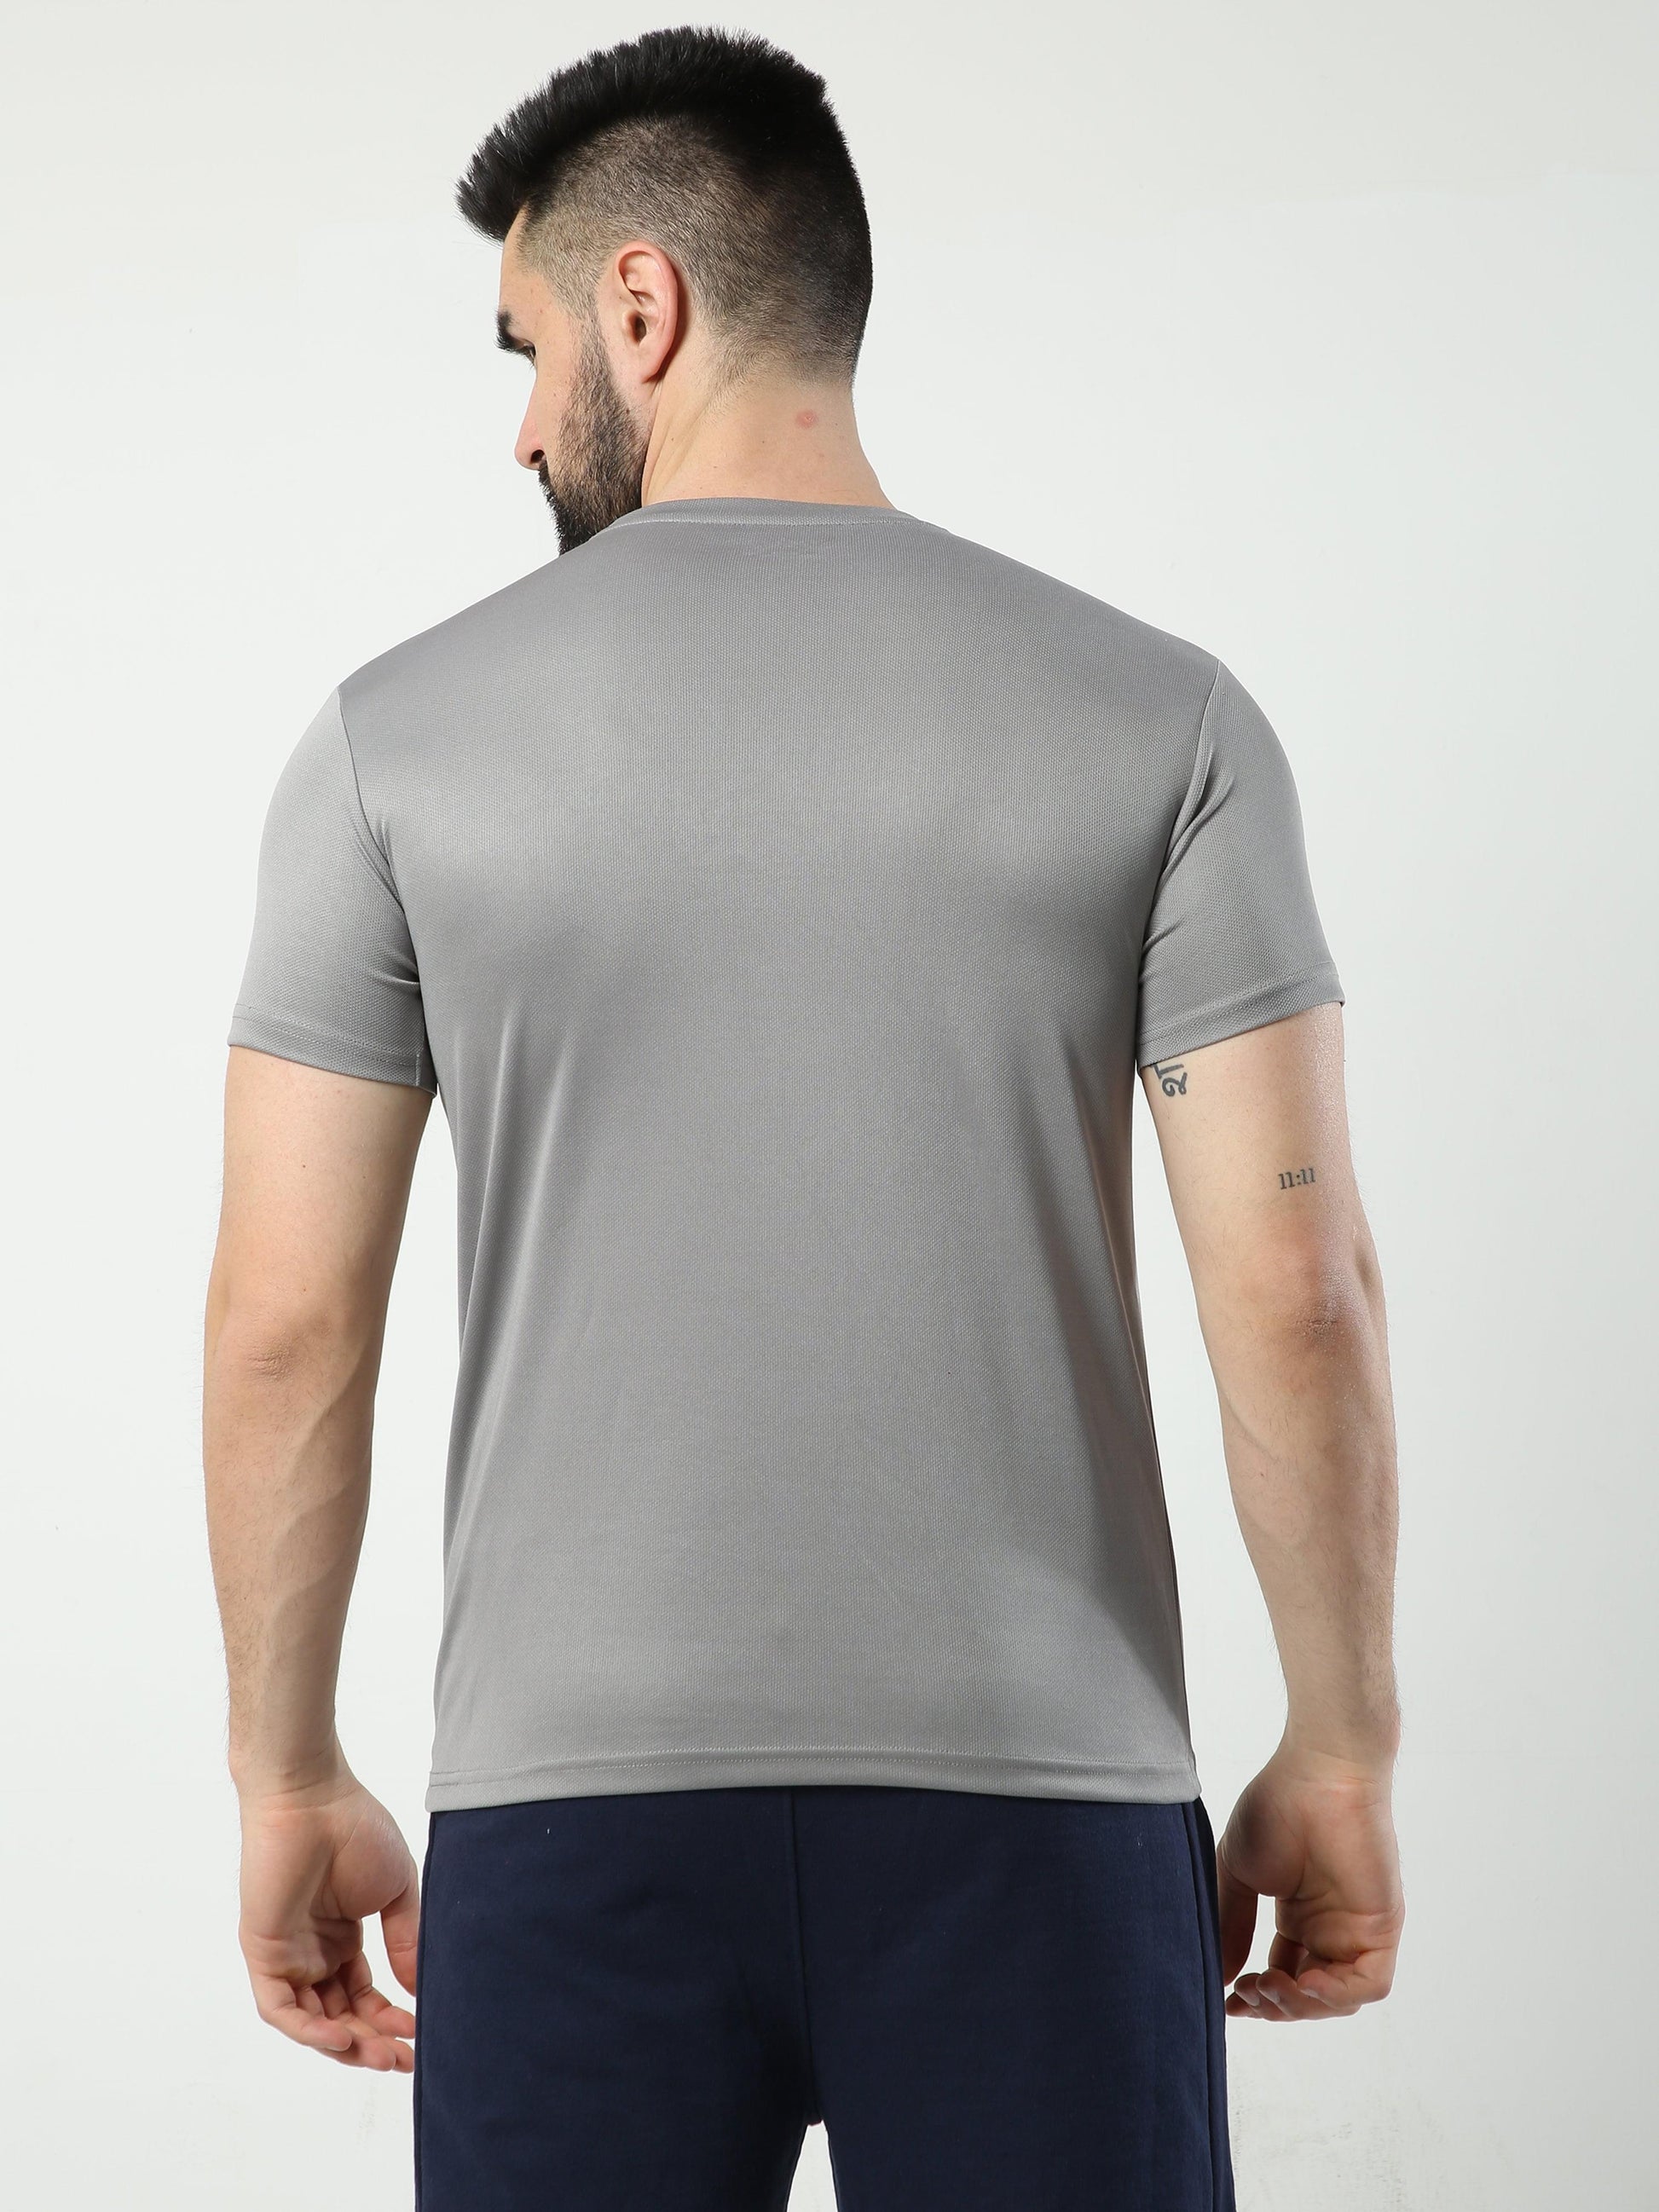 Athleisure Men's Premium T-Shirt - Charcoal